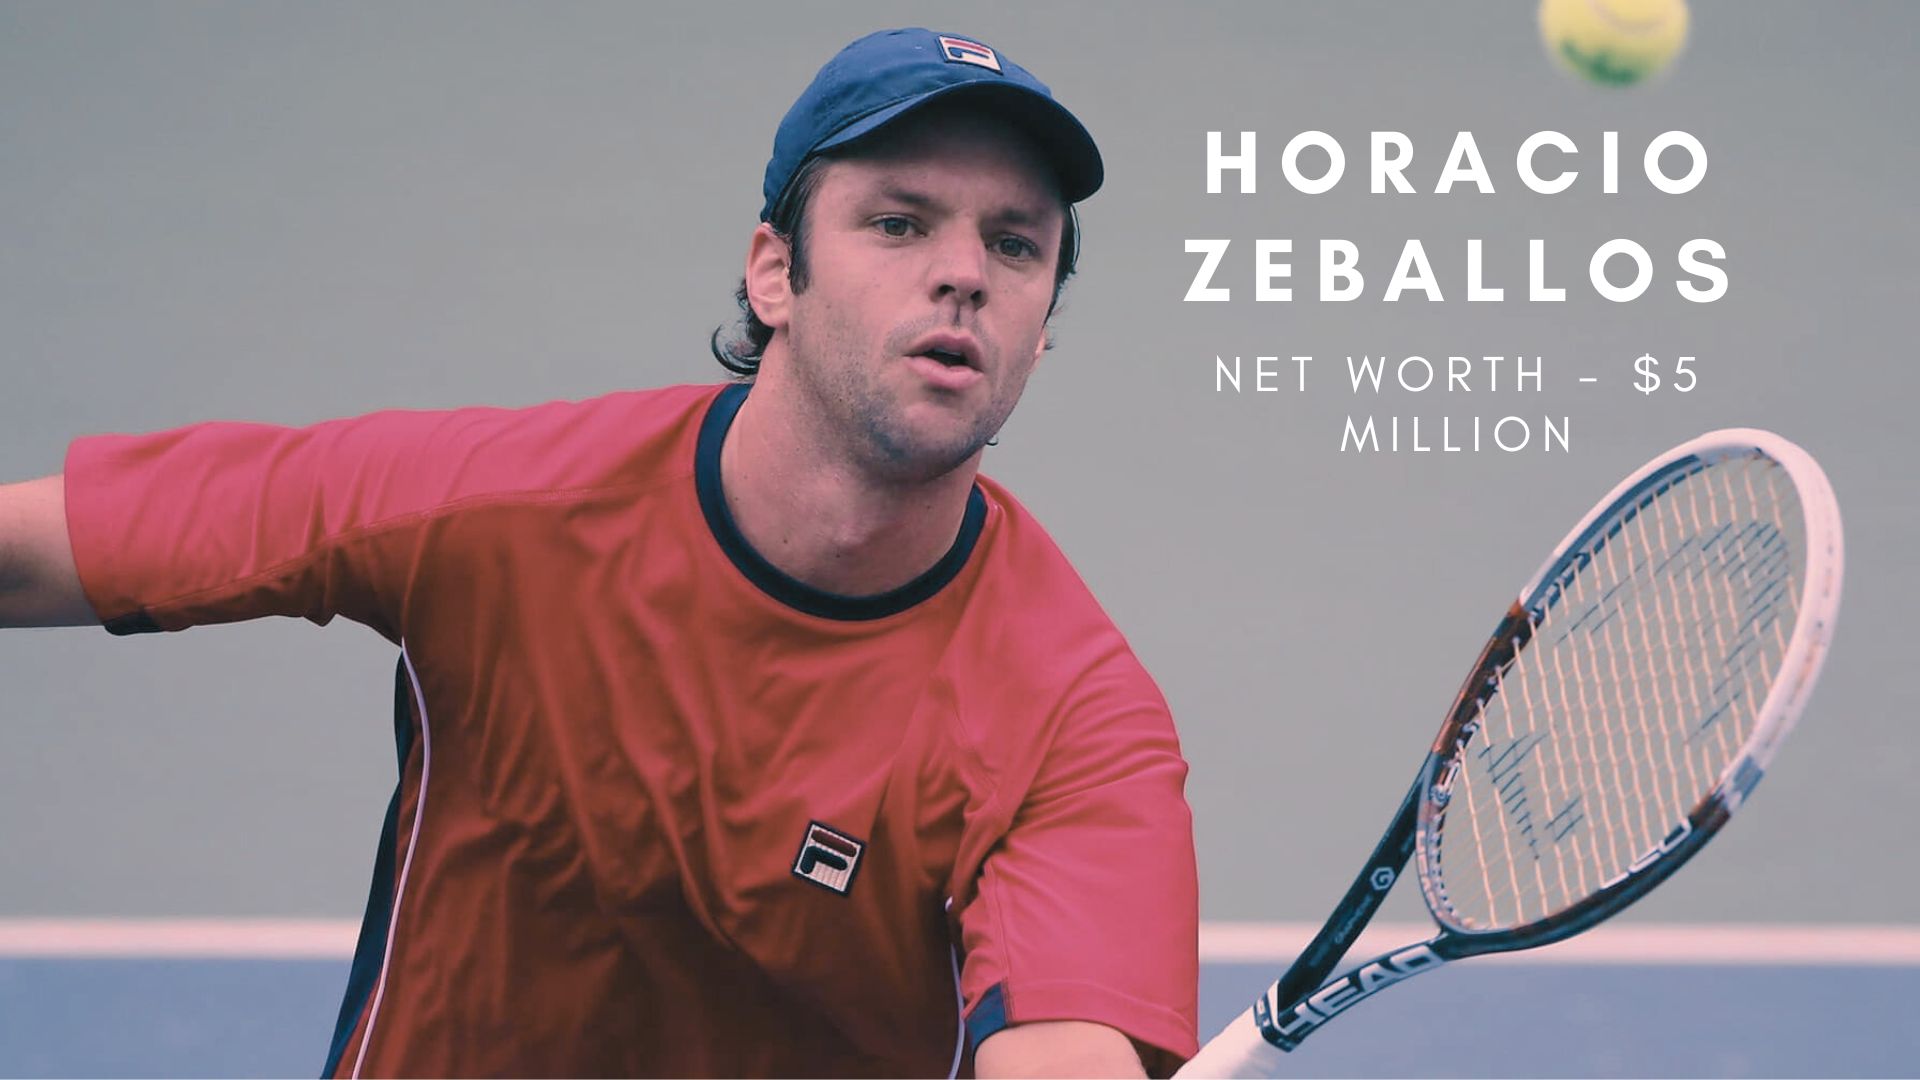 Horacio Zeballos net worth